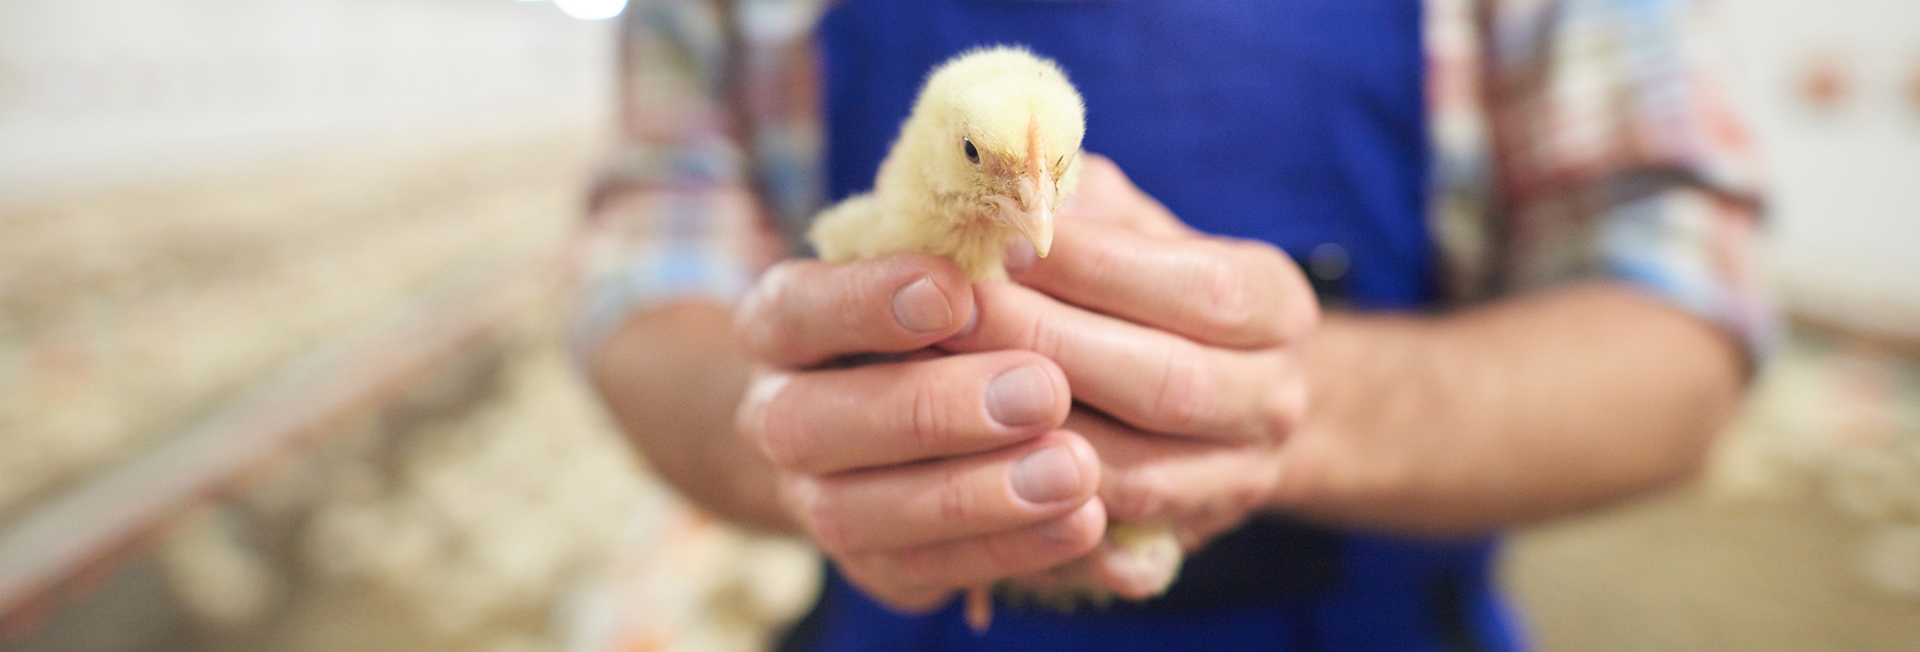 South Carolina Poultry Federation Economic Impact